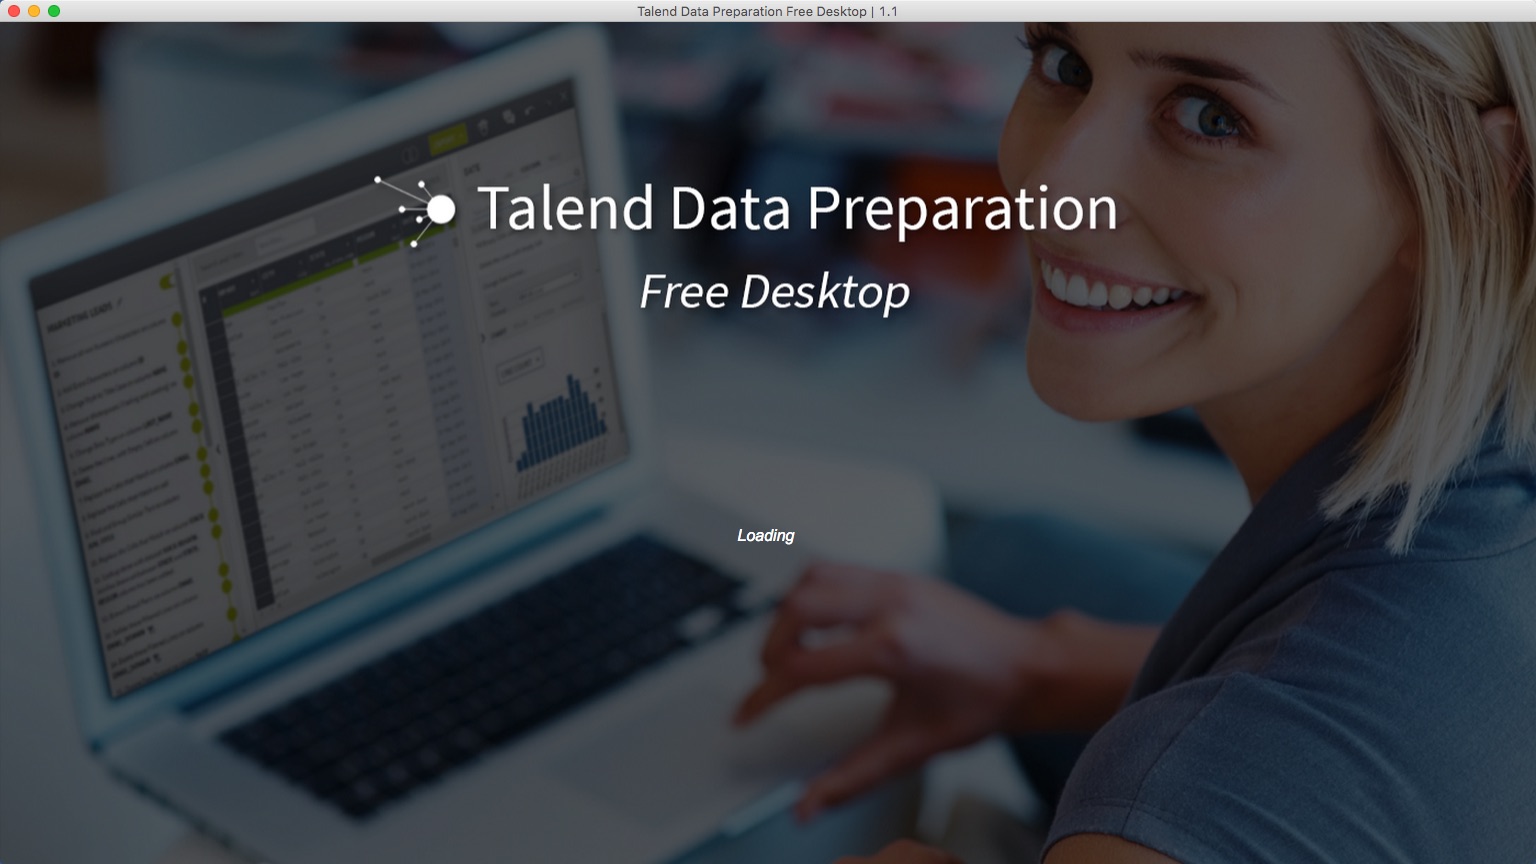 Talend Data Preparation Free Desktop 1.1 : Main window